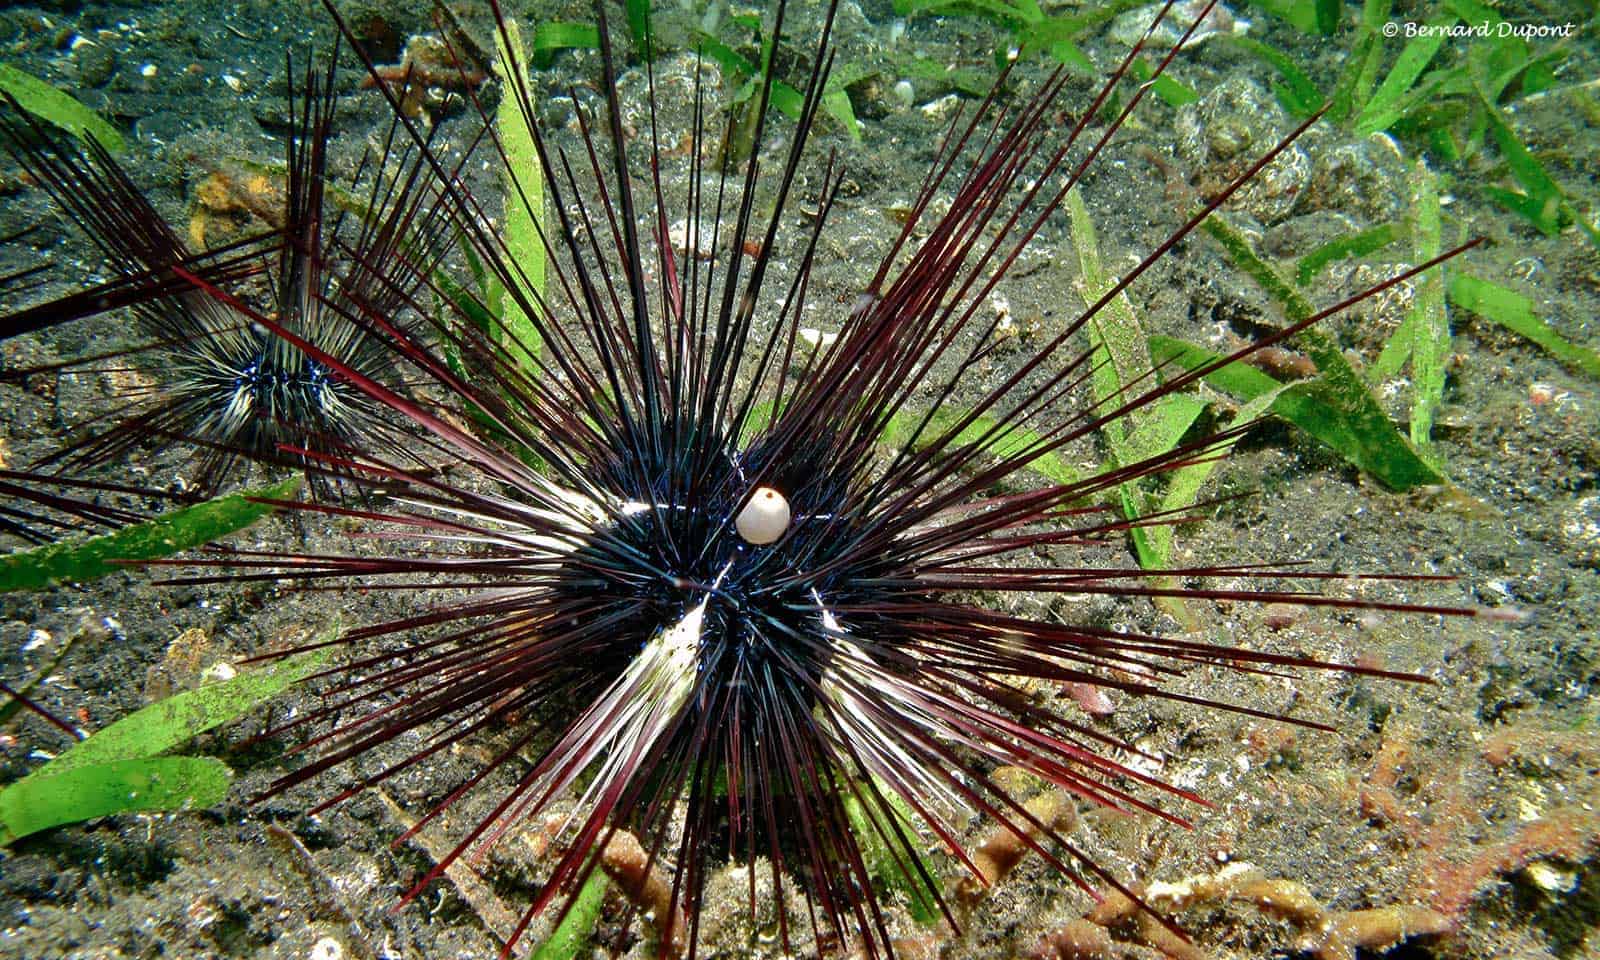 Diadema setosum - porcupine Sea Urchin